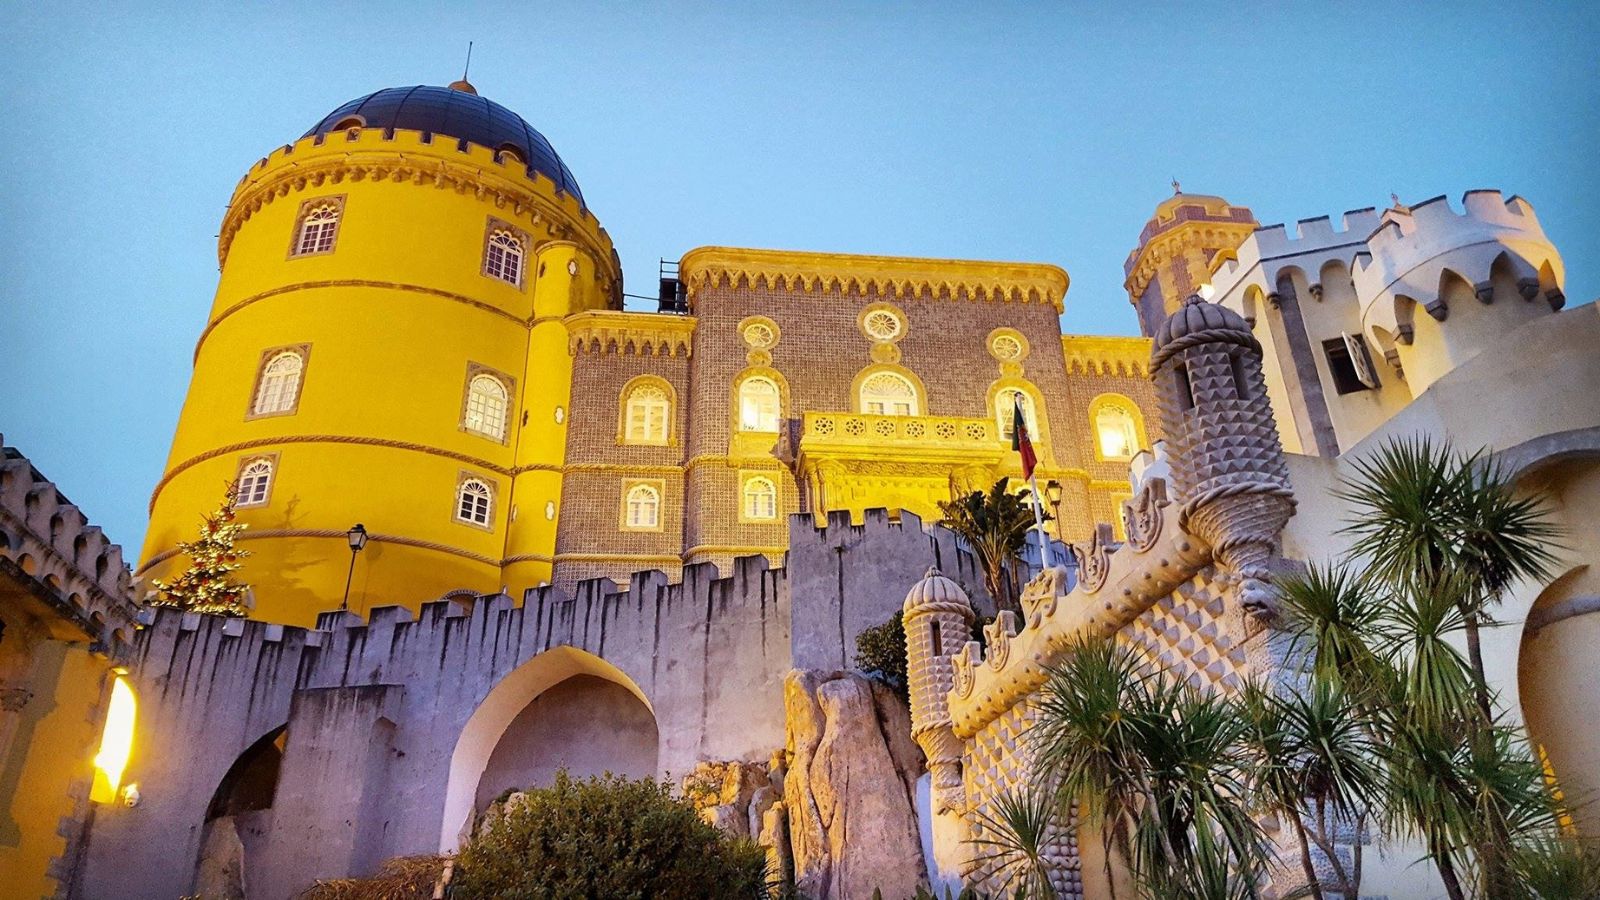 Pena Palace in Portugal (Photo: @mike_mode via Twenty20)